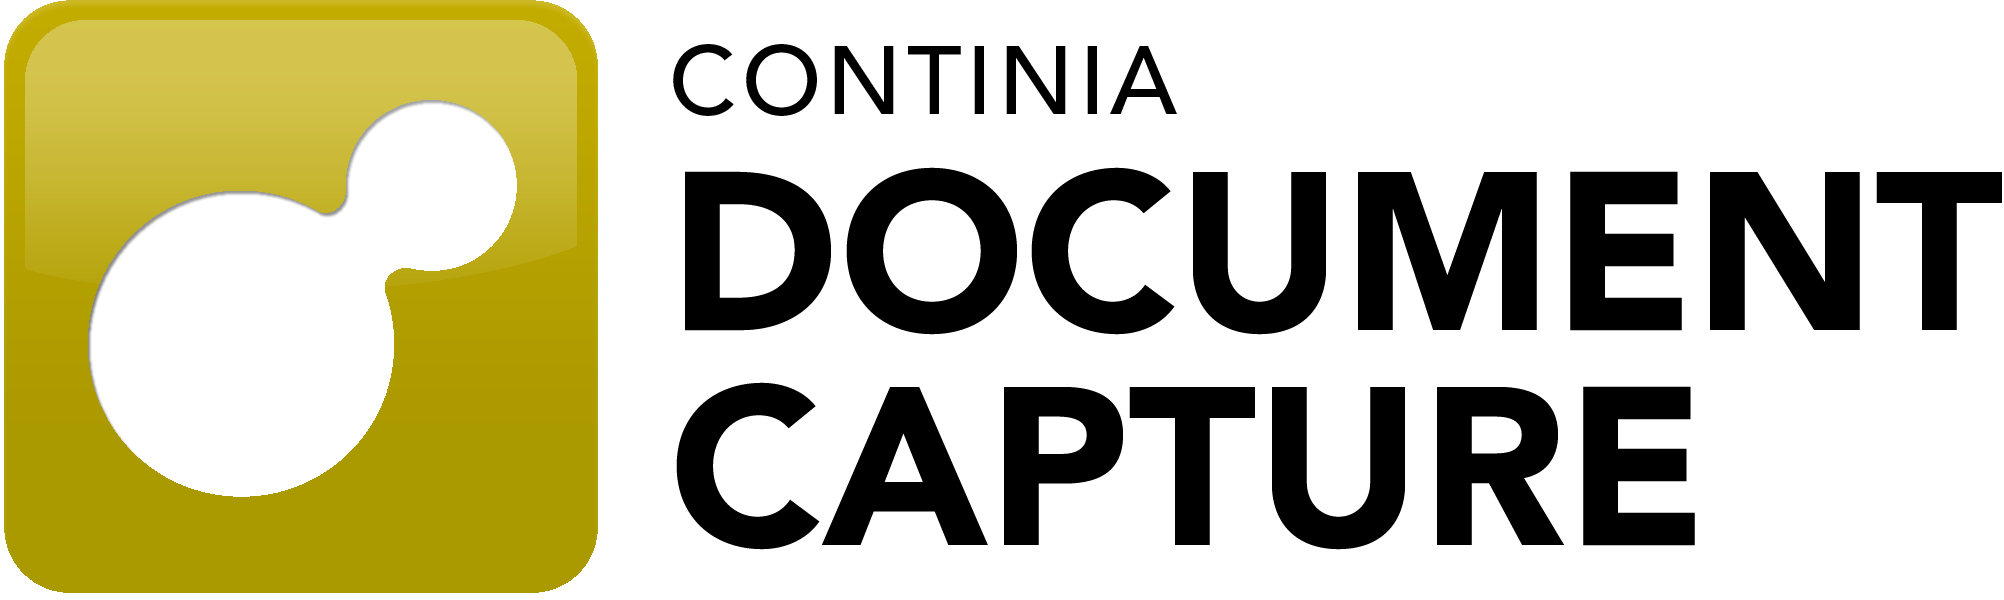 Continia-document-capture-logo